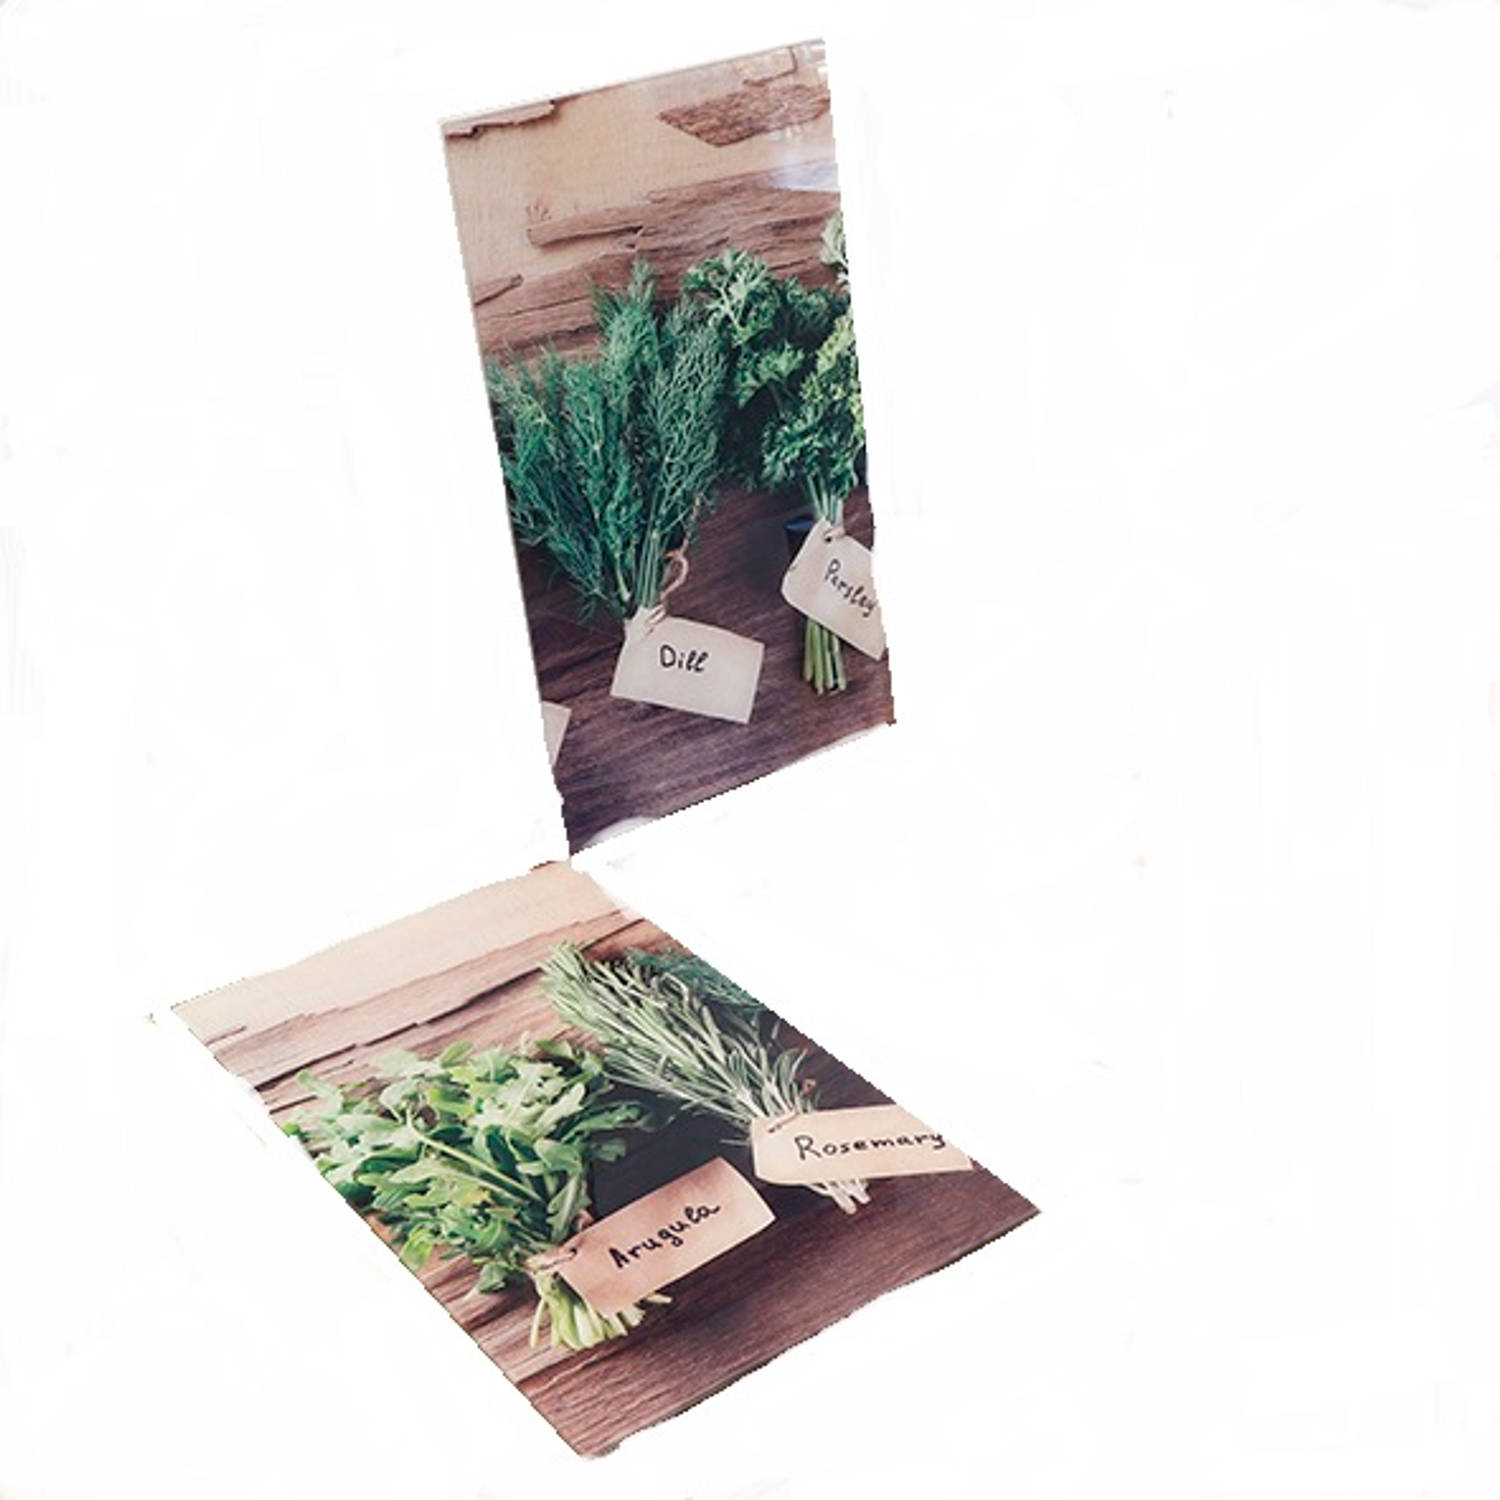 Haushalt 28024 - Afdek kookplaten - 2 stuks - kruidenplanten